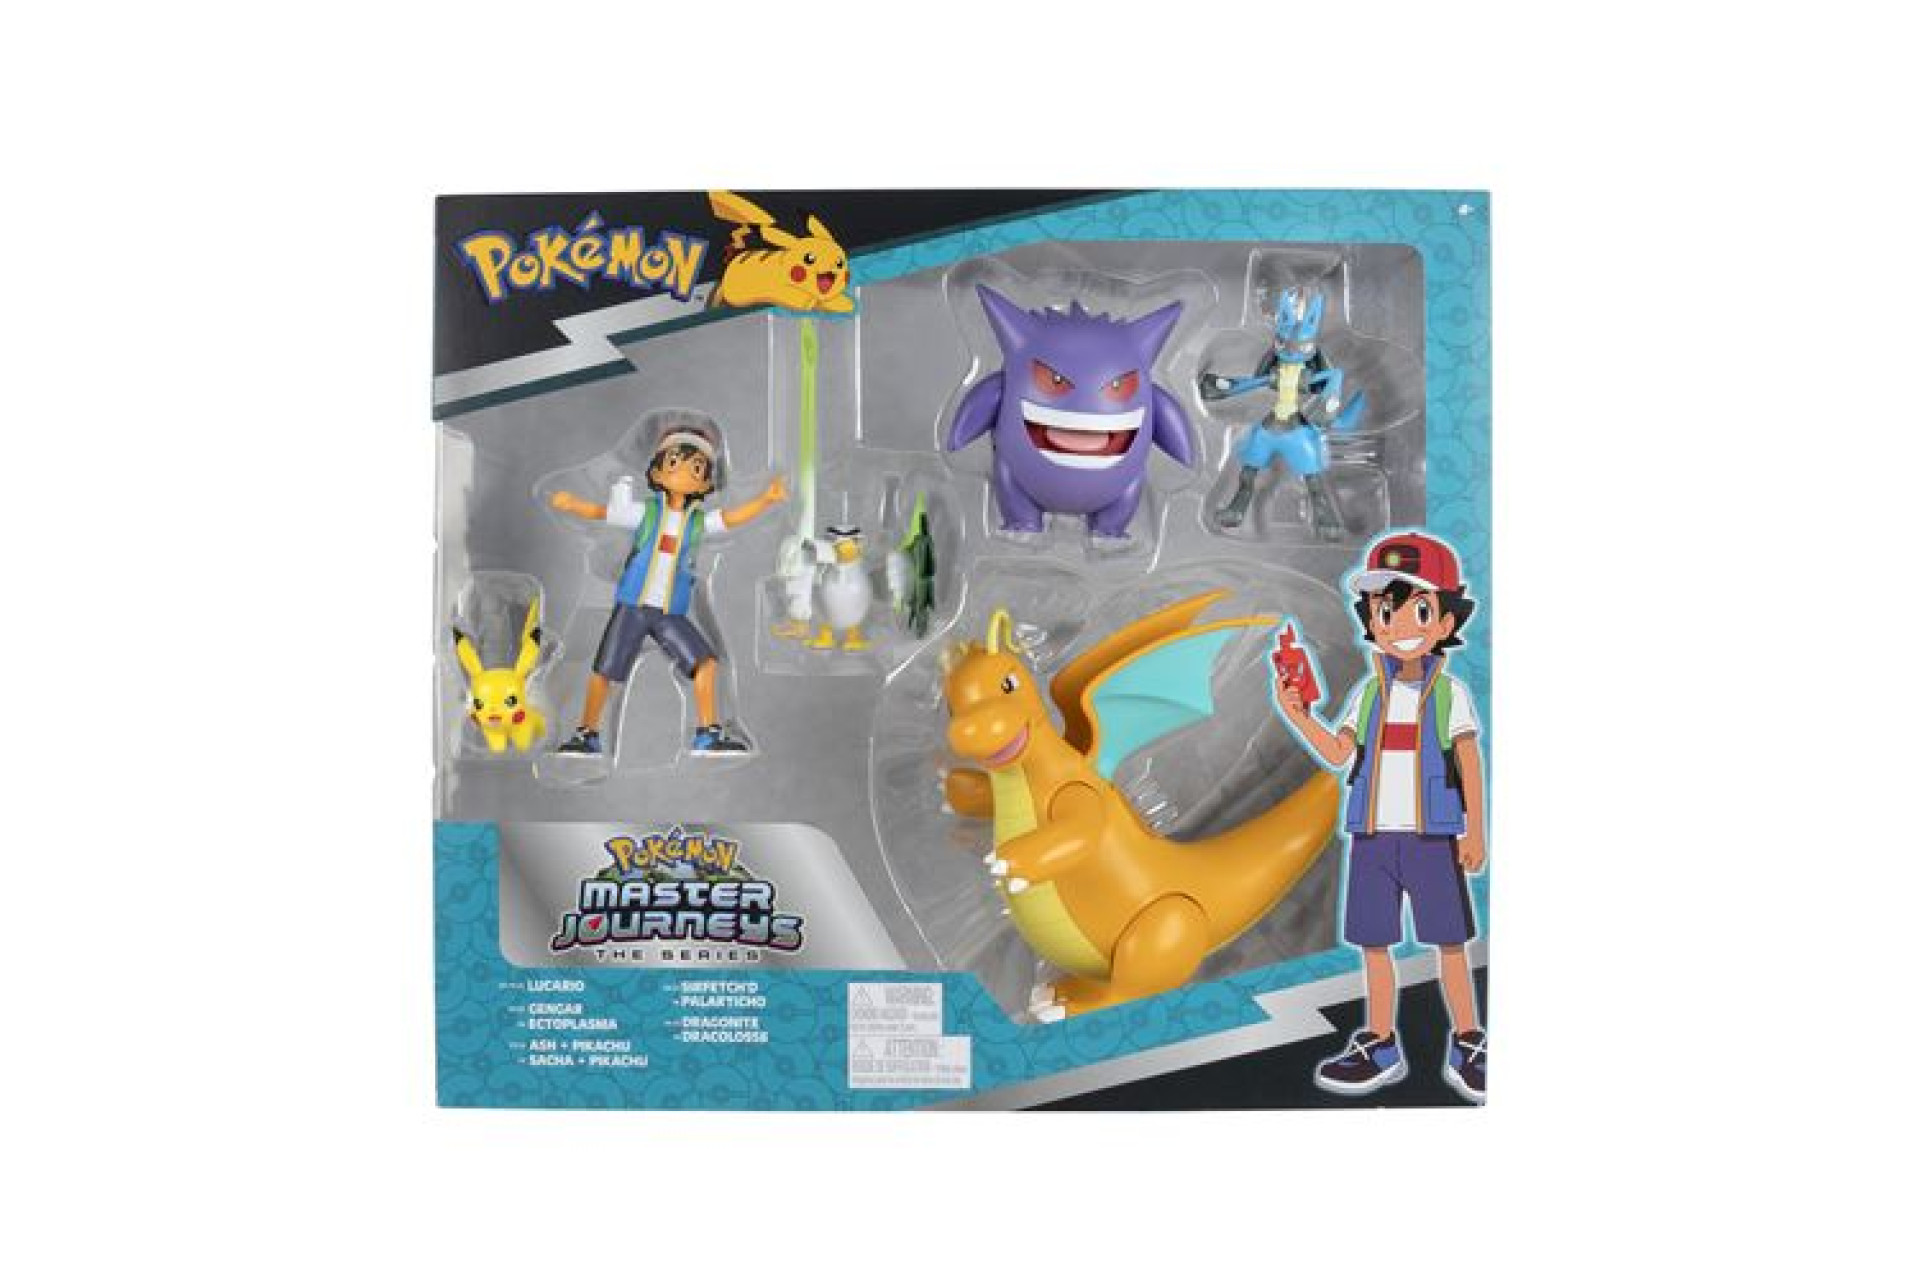 Acheter Méga Pack de 5 Figurines Pokémon